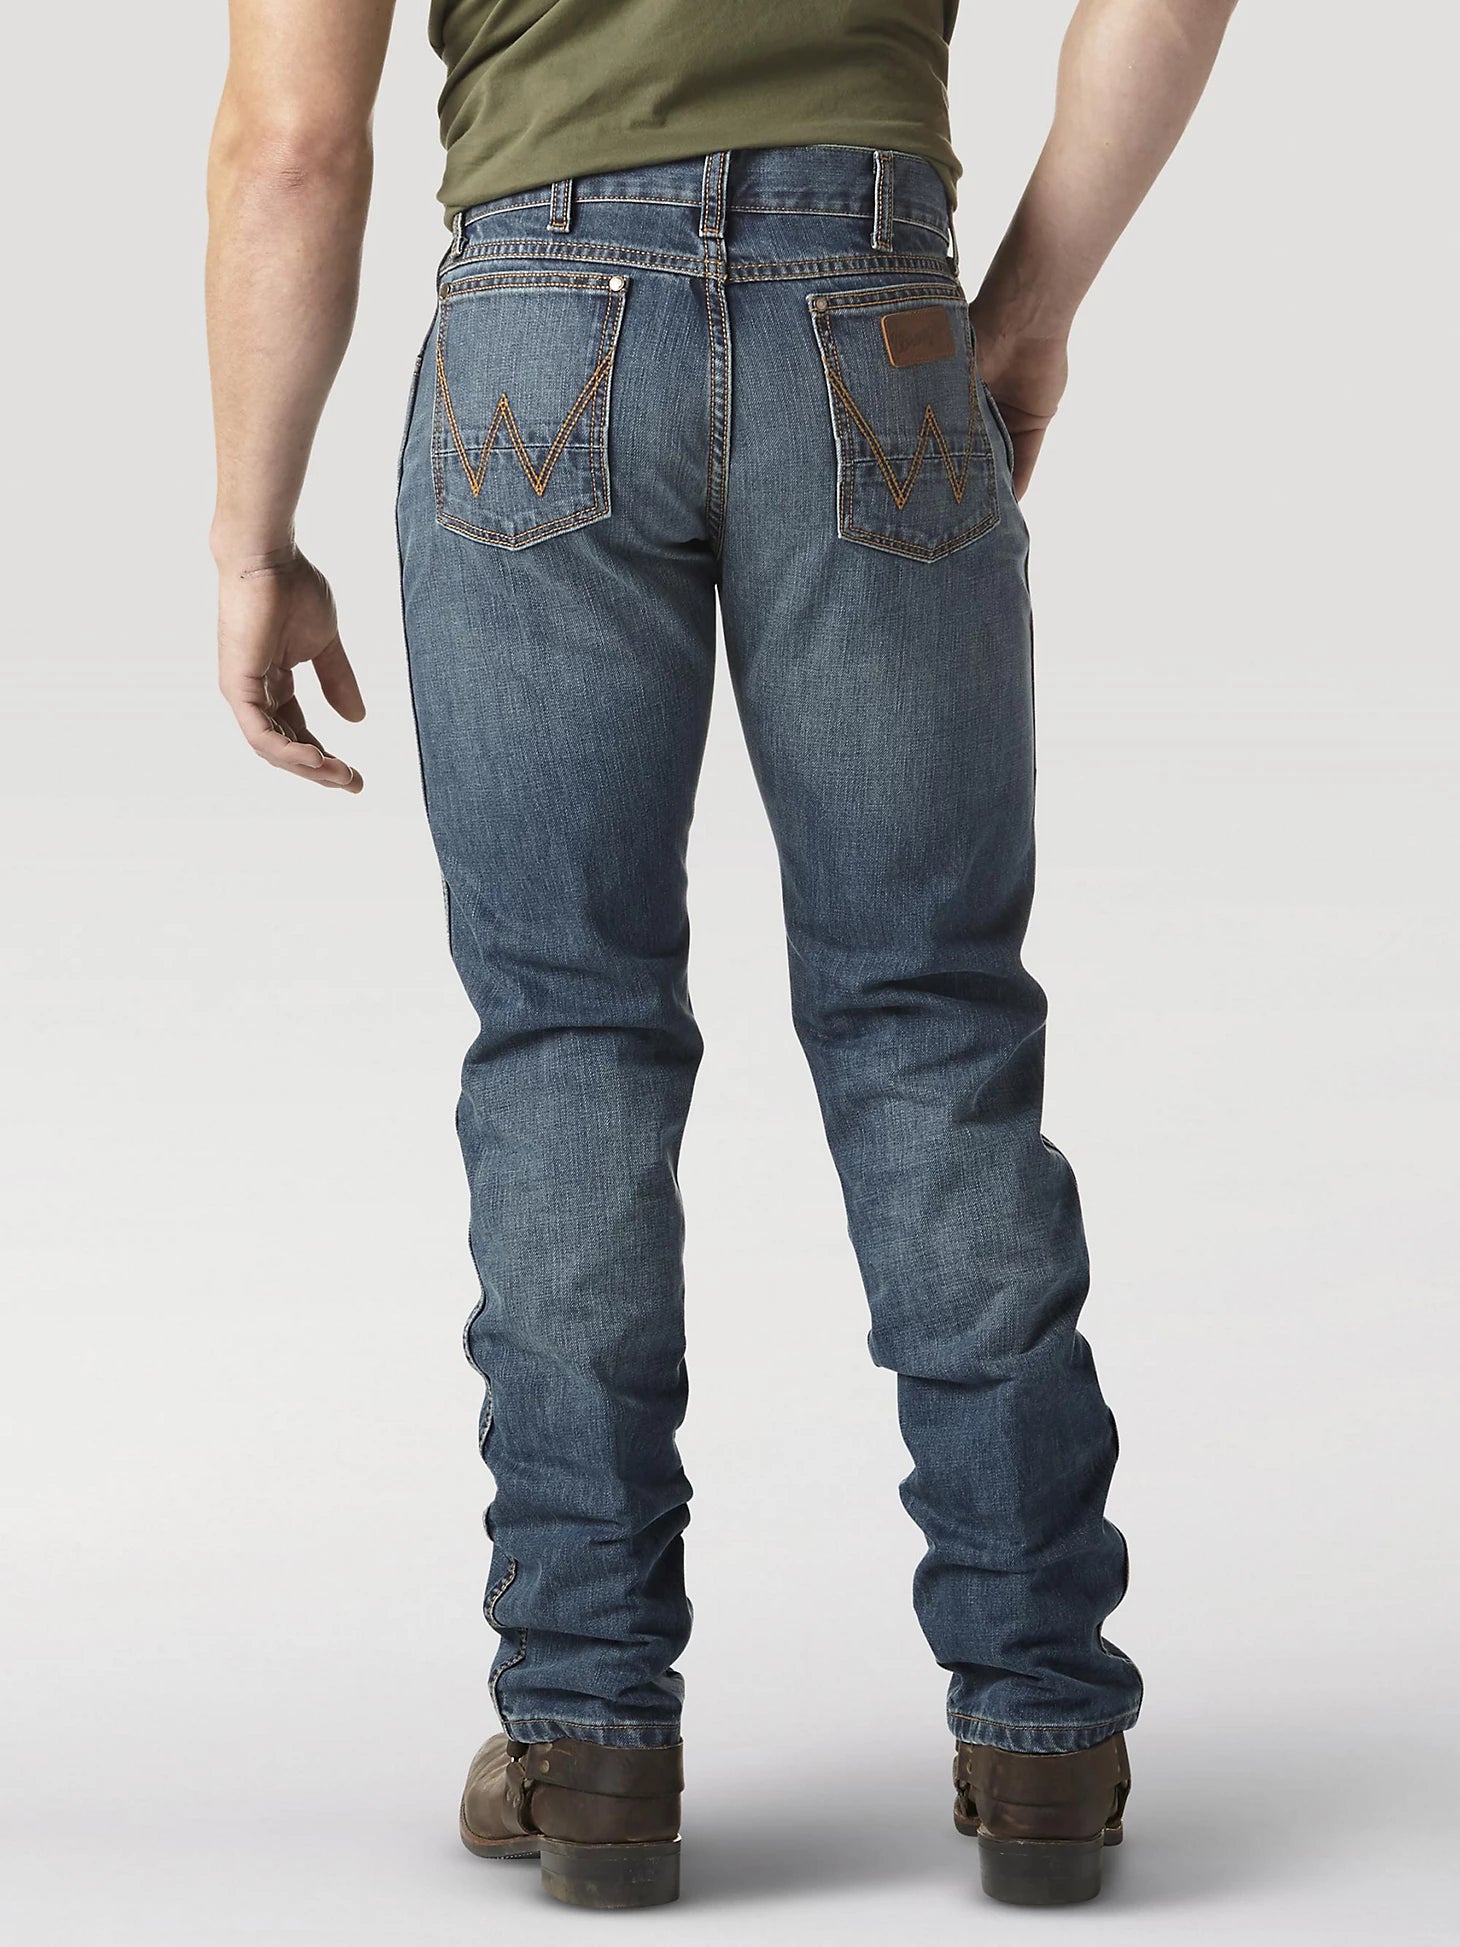 Jeans Wrangler Retro Slim Straight Rocky Top Caballero